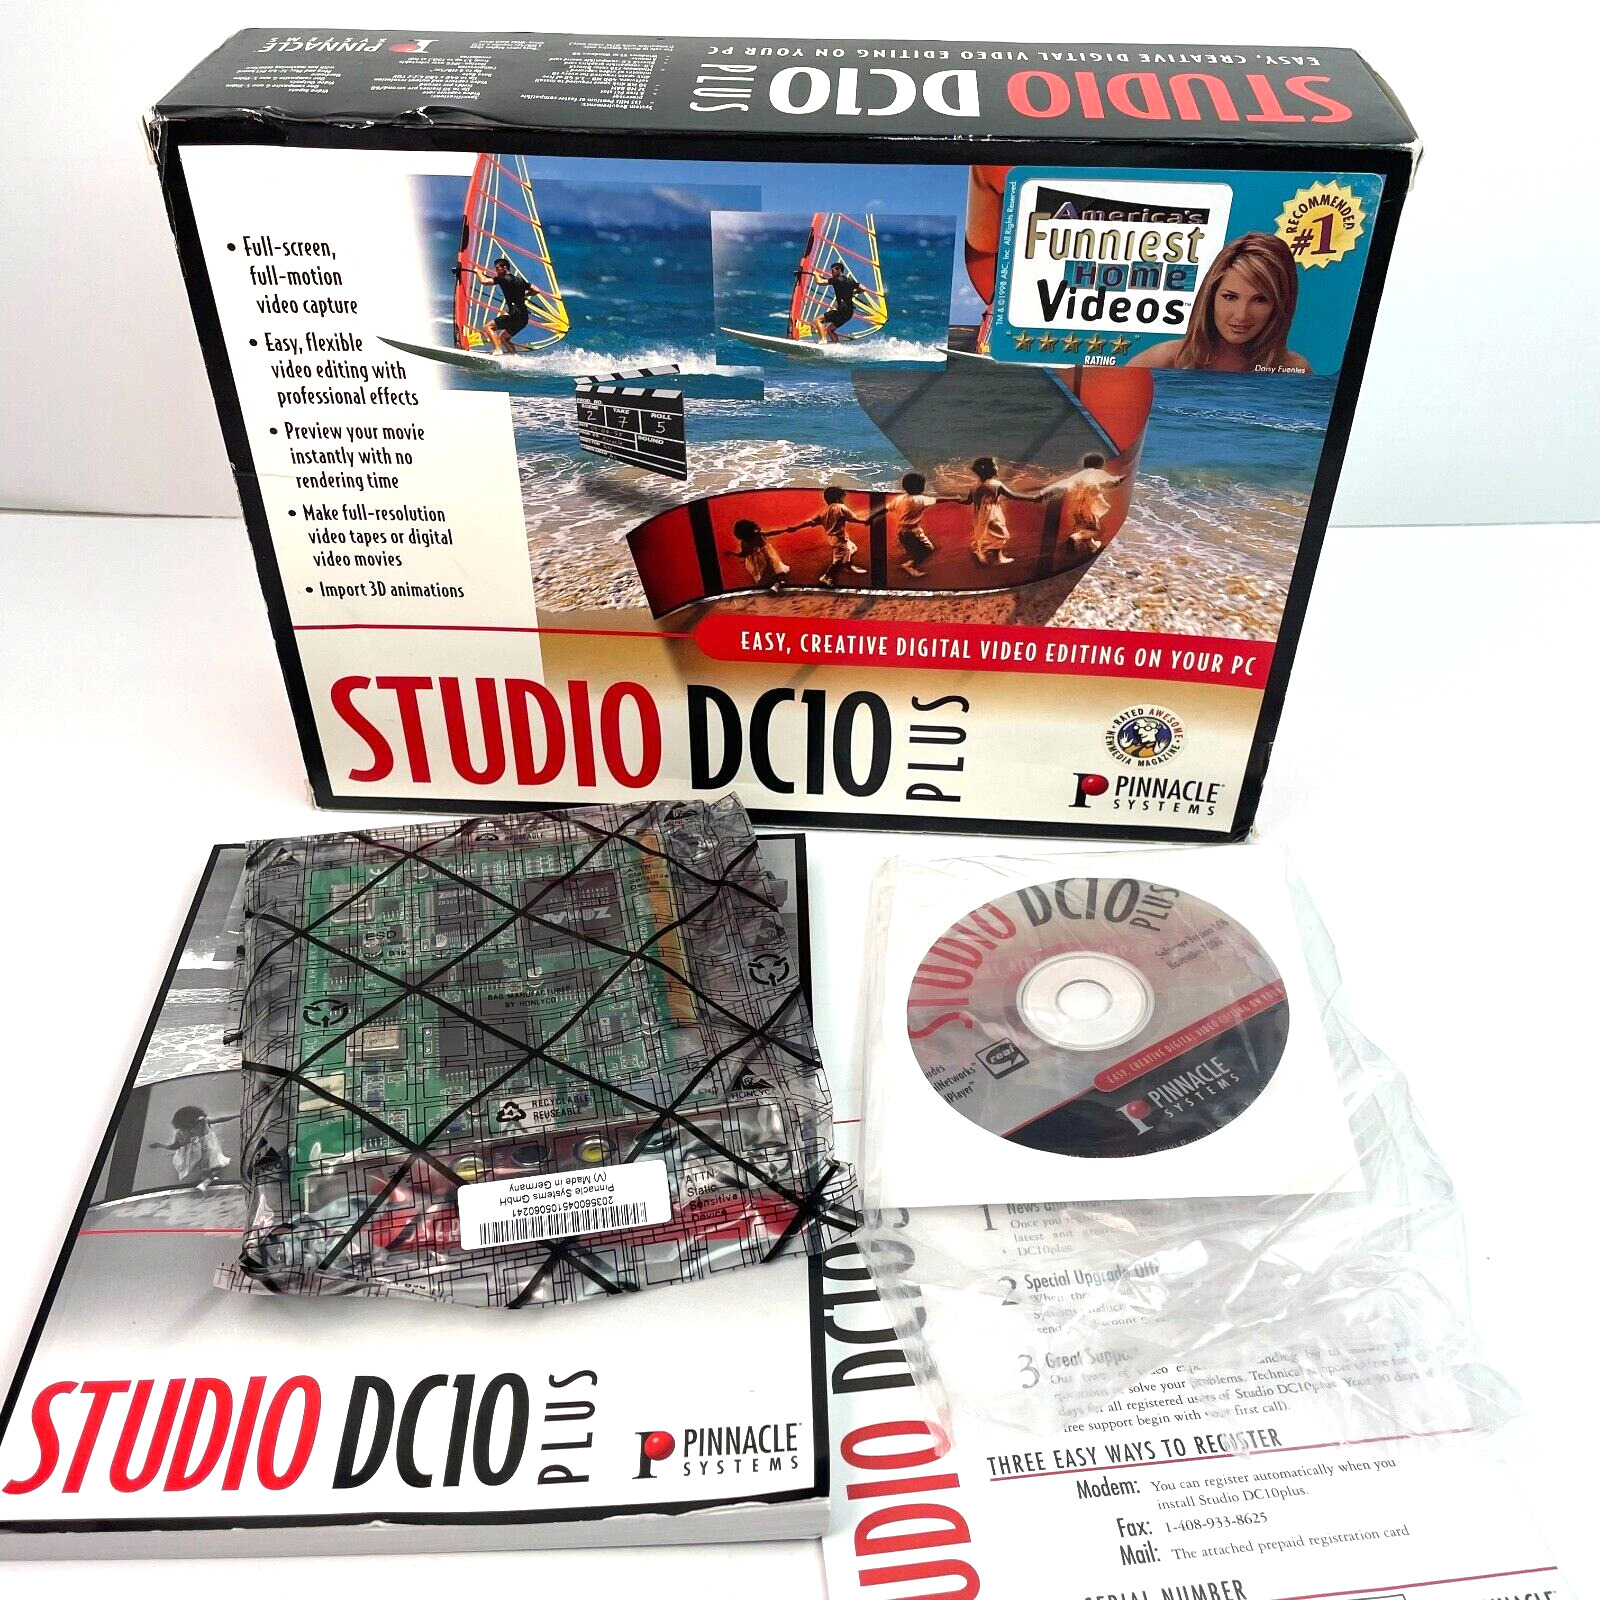 Pinnacle Studio DC10 Plus PC Video Editing Windows 98 Big Box 90s *NEW OPEN BOX*